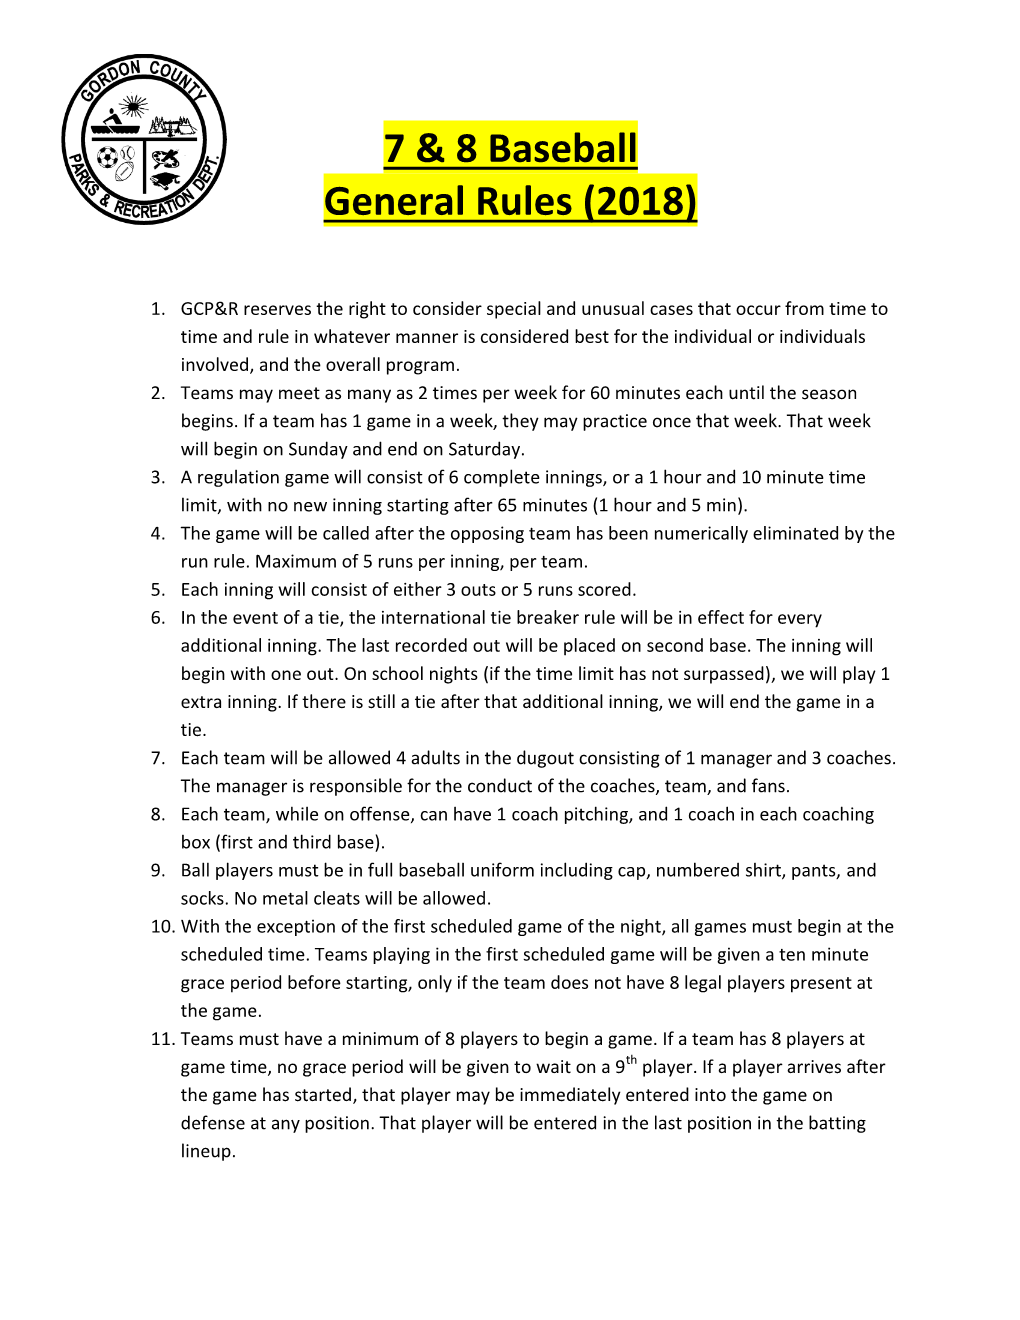 7 & 8 Baseball General Rules (2018)